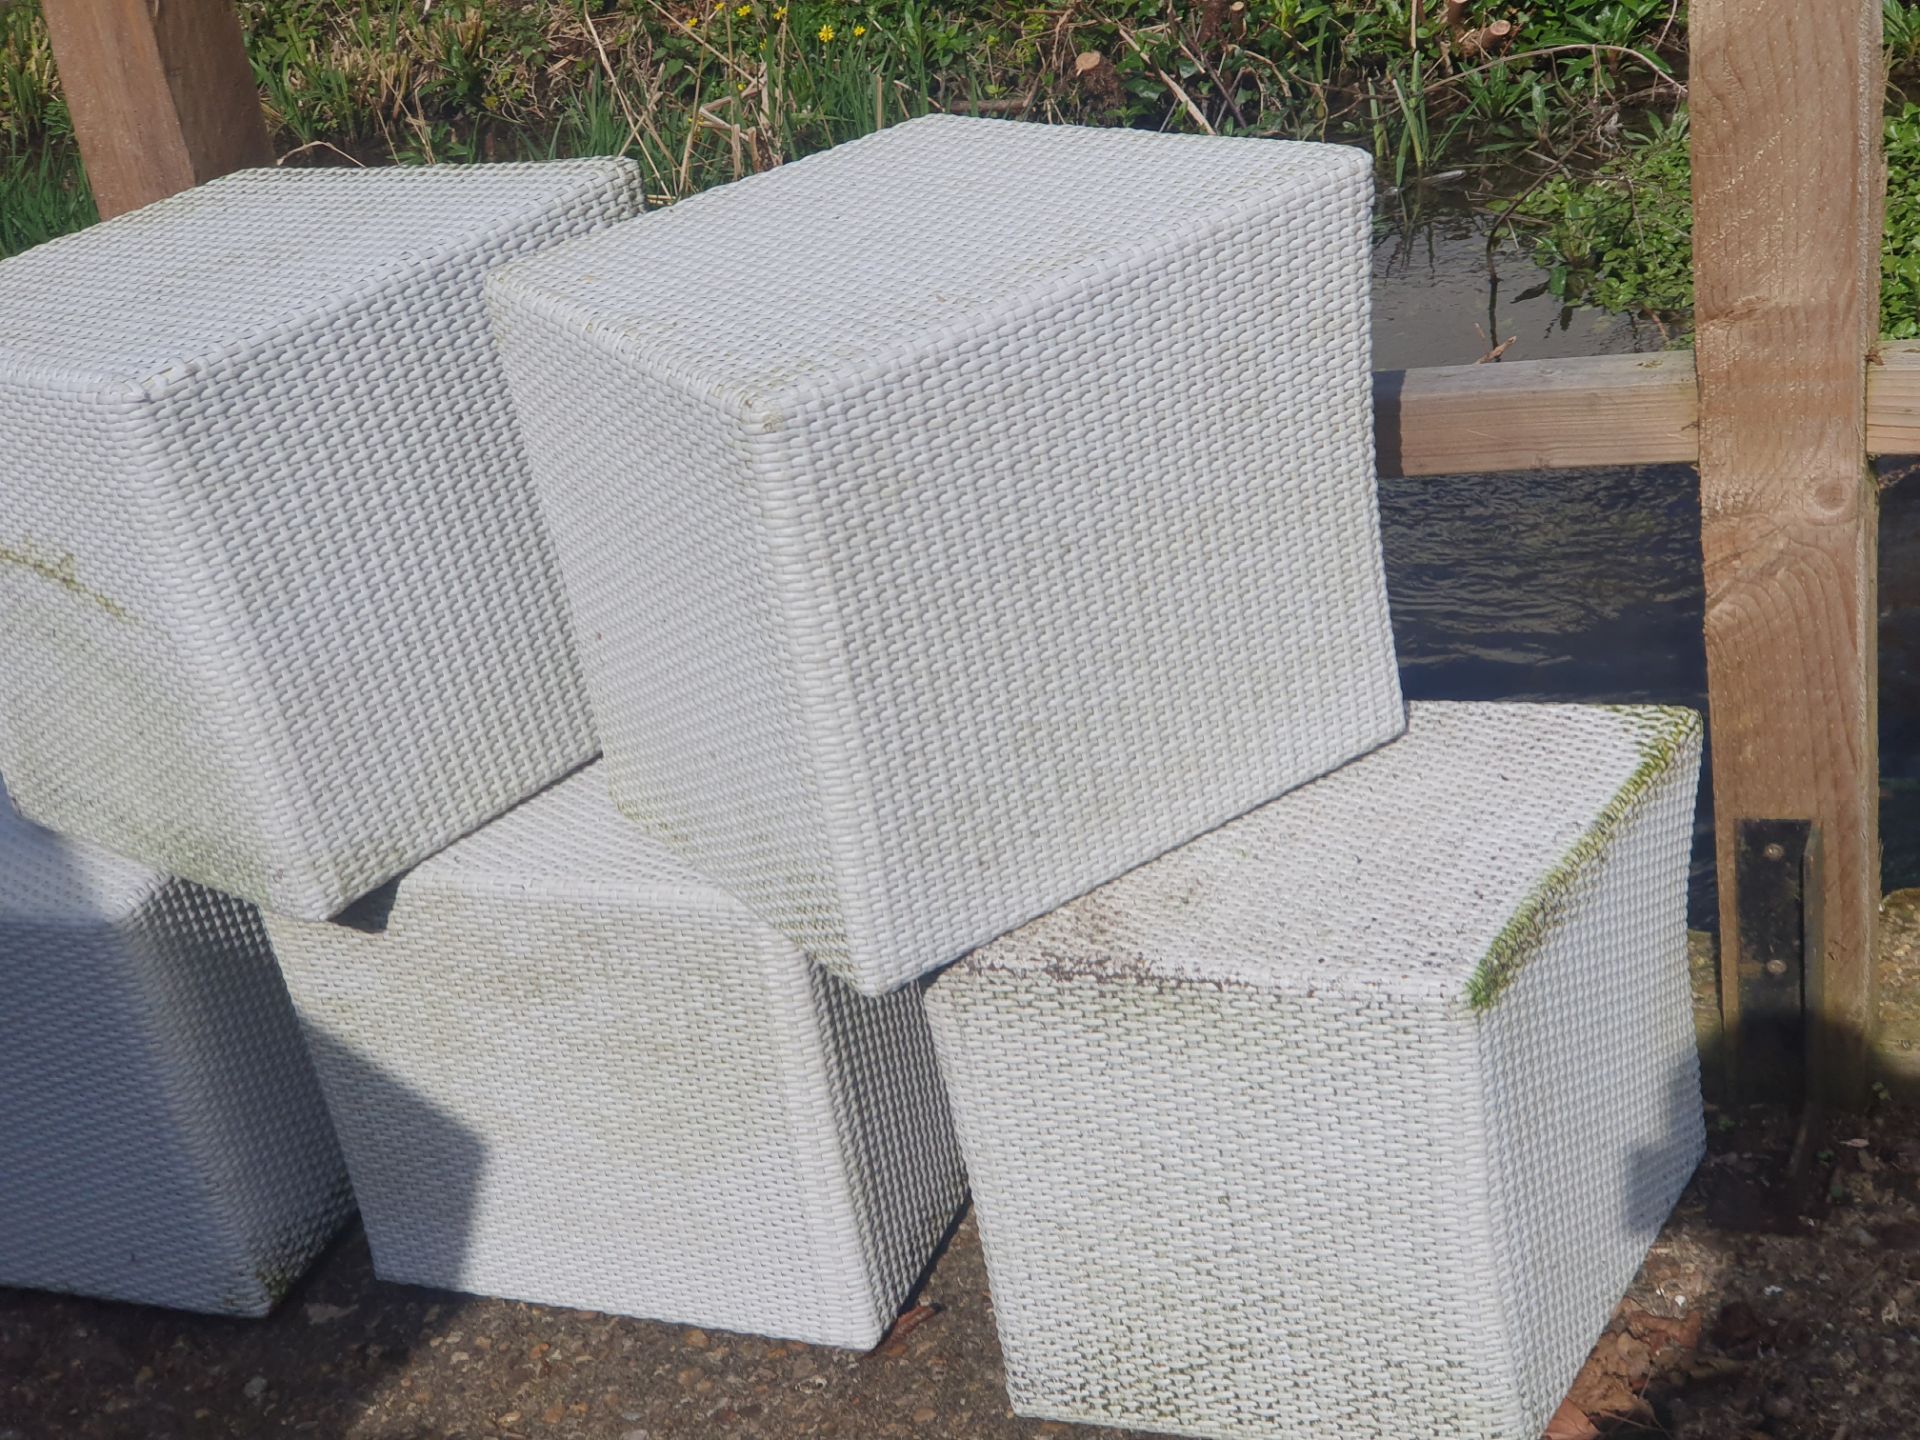 A Set of 5 White Rattan Garden Stools - Image 3 of 3